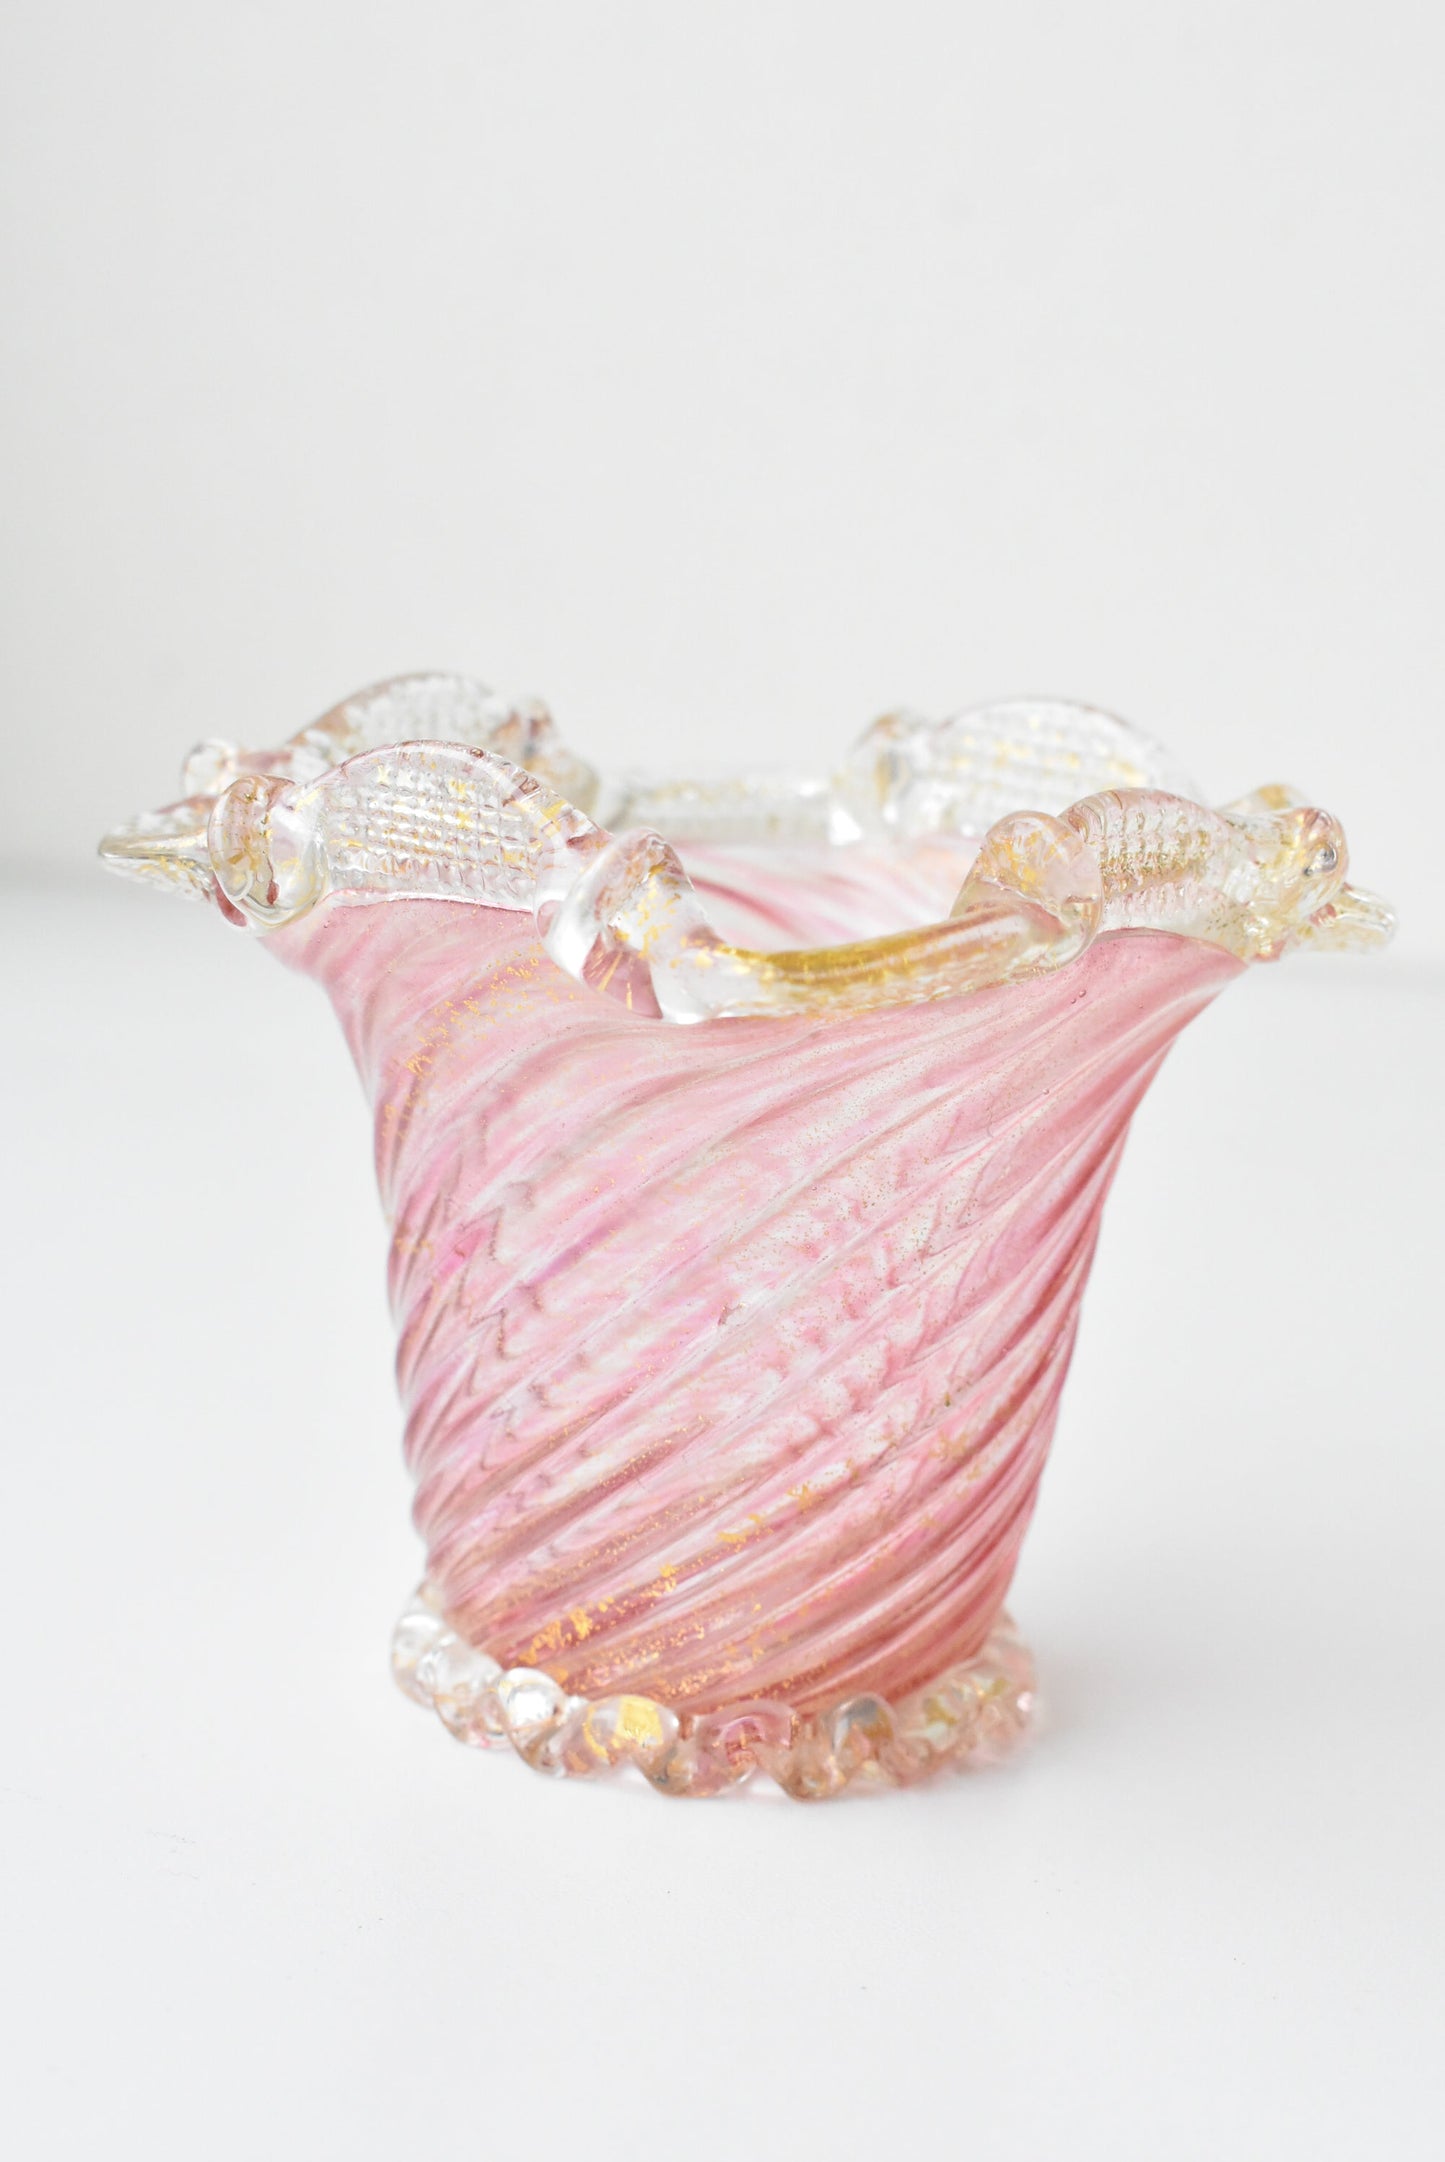 Vintage swirl ribbed little glass vase